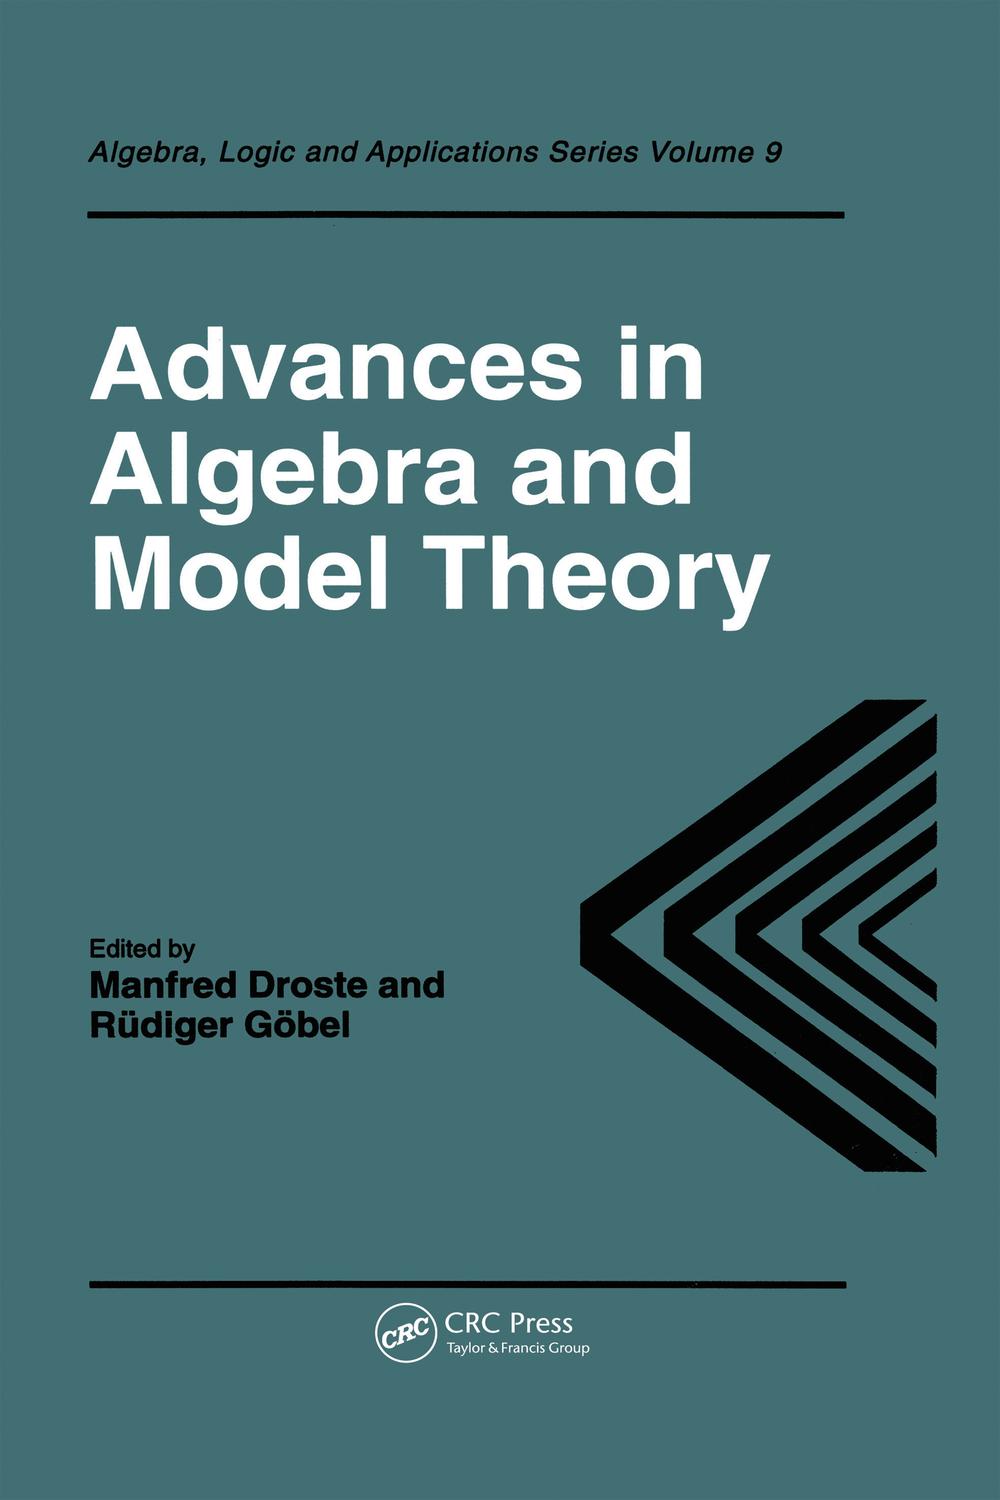 Advances in Algebra and Model Theory - M Droste, R. Gobel